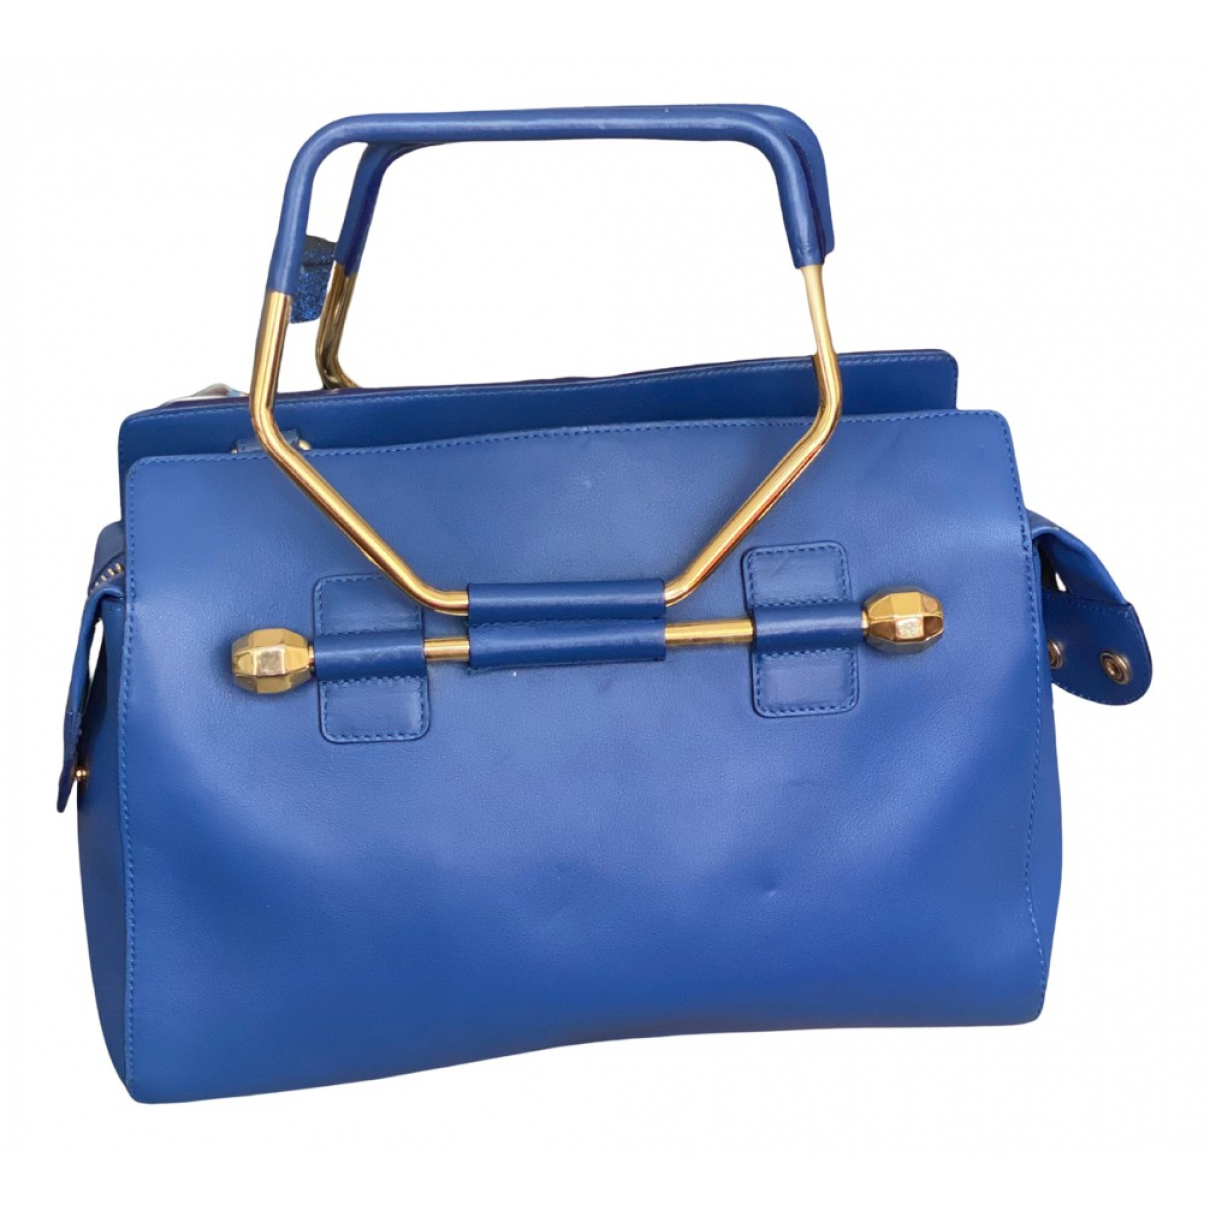 Leather Popular National products brand handbag